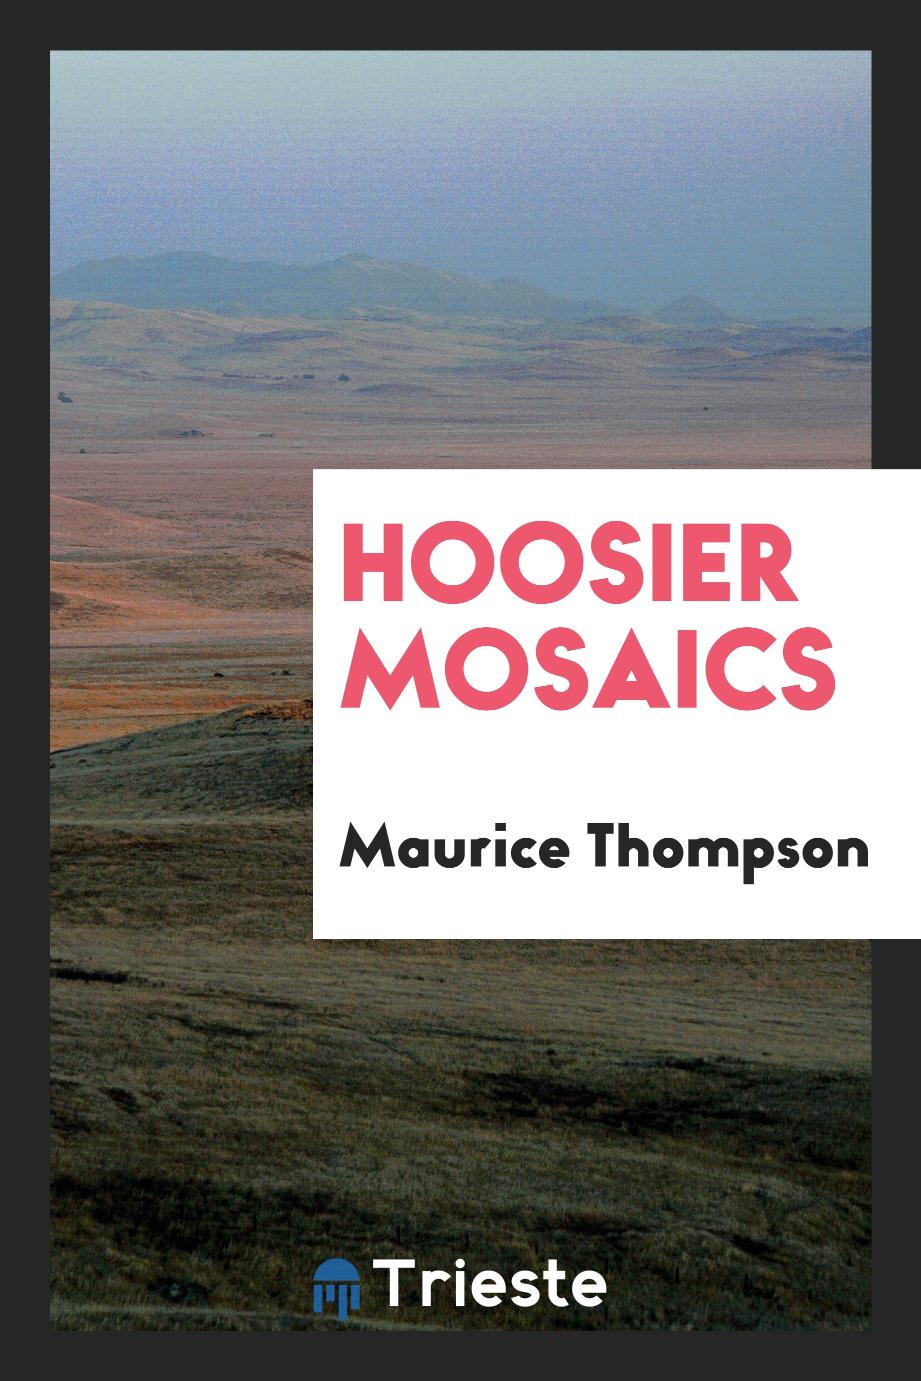 Hoosier mosaics